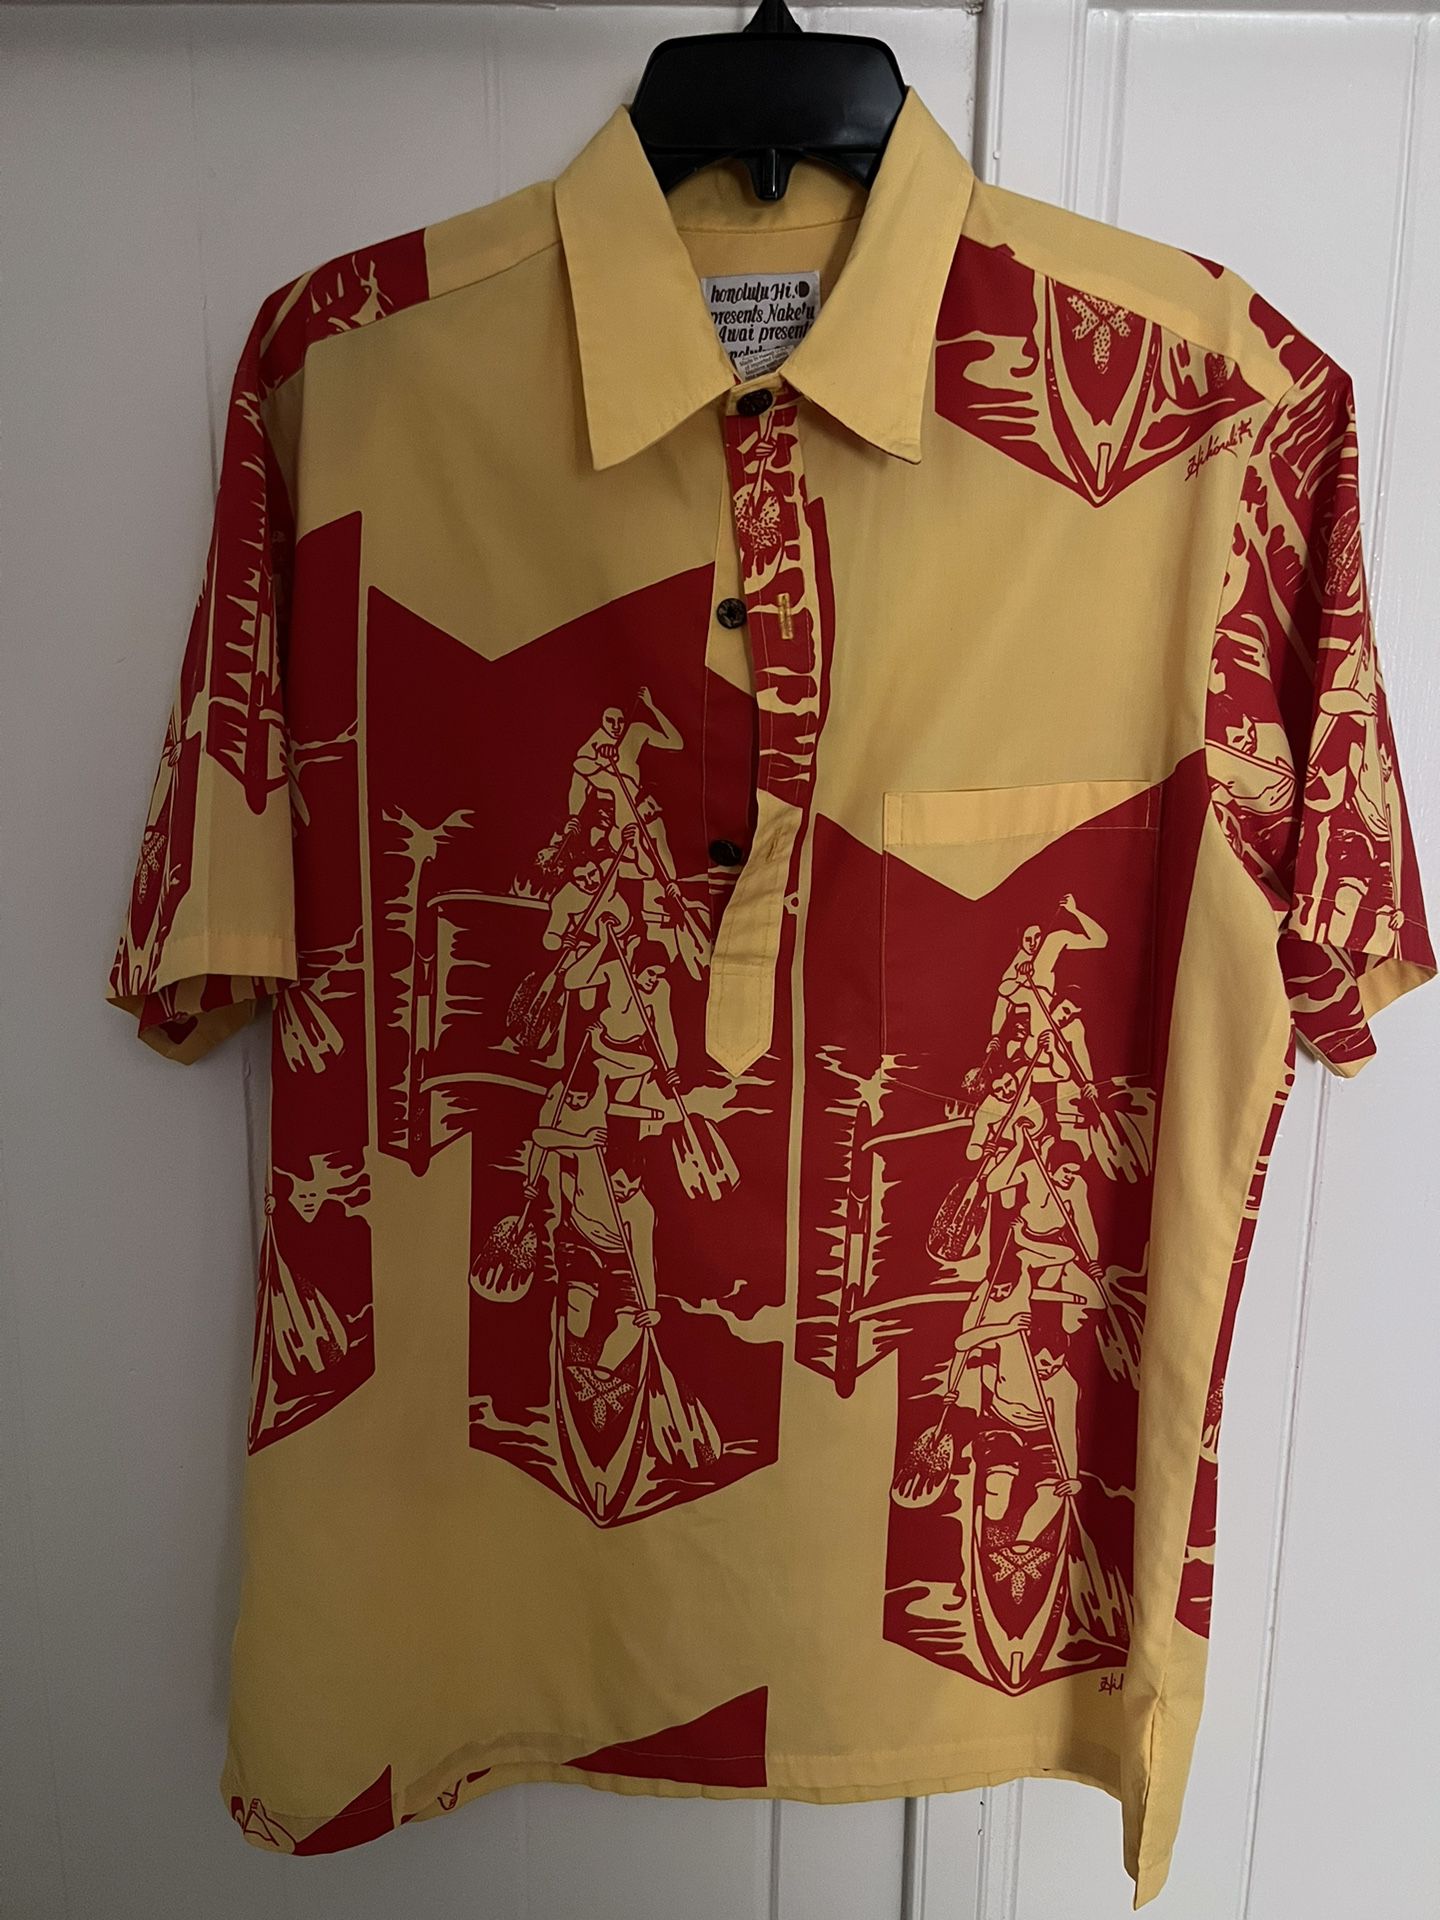 Nake U Awai Presents Aloha Hawaiian Outrigger Designs Aloha Shirt Size XL